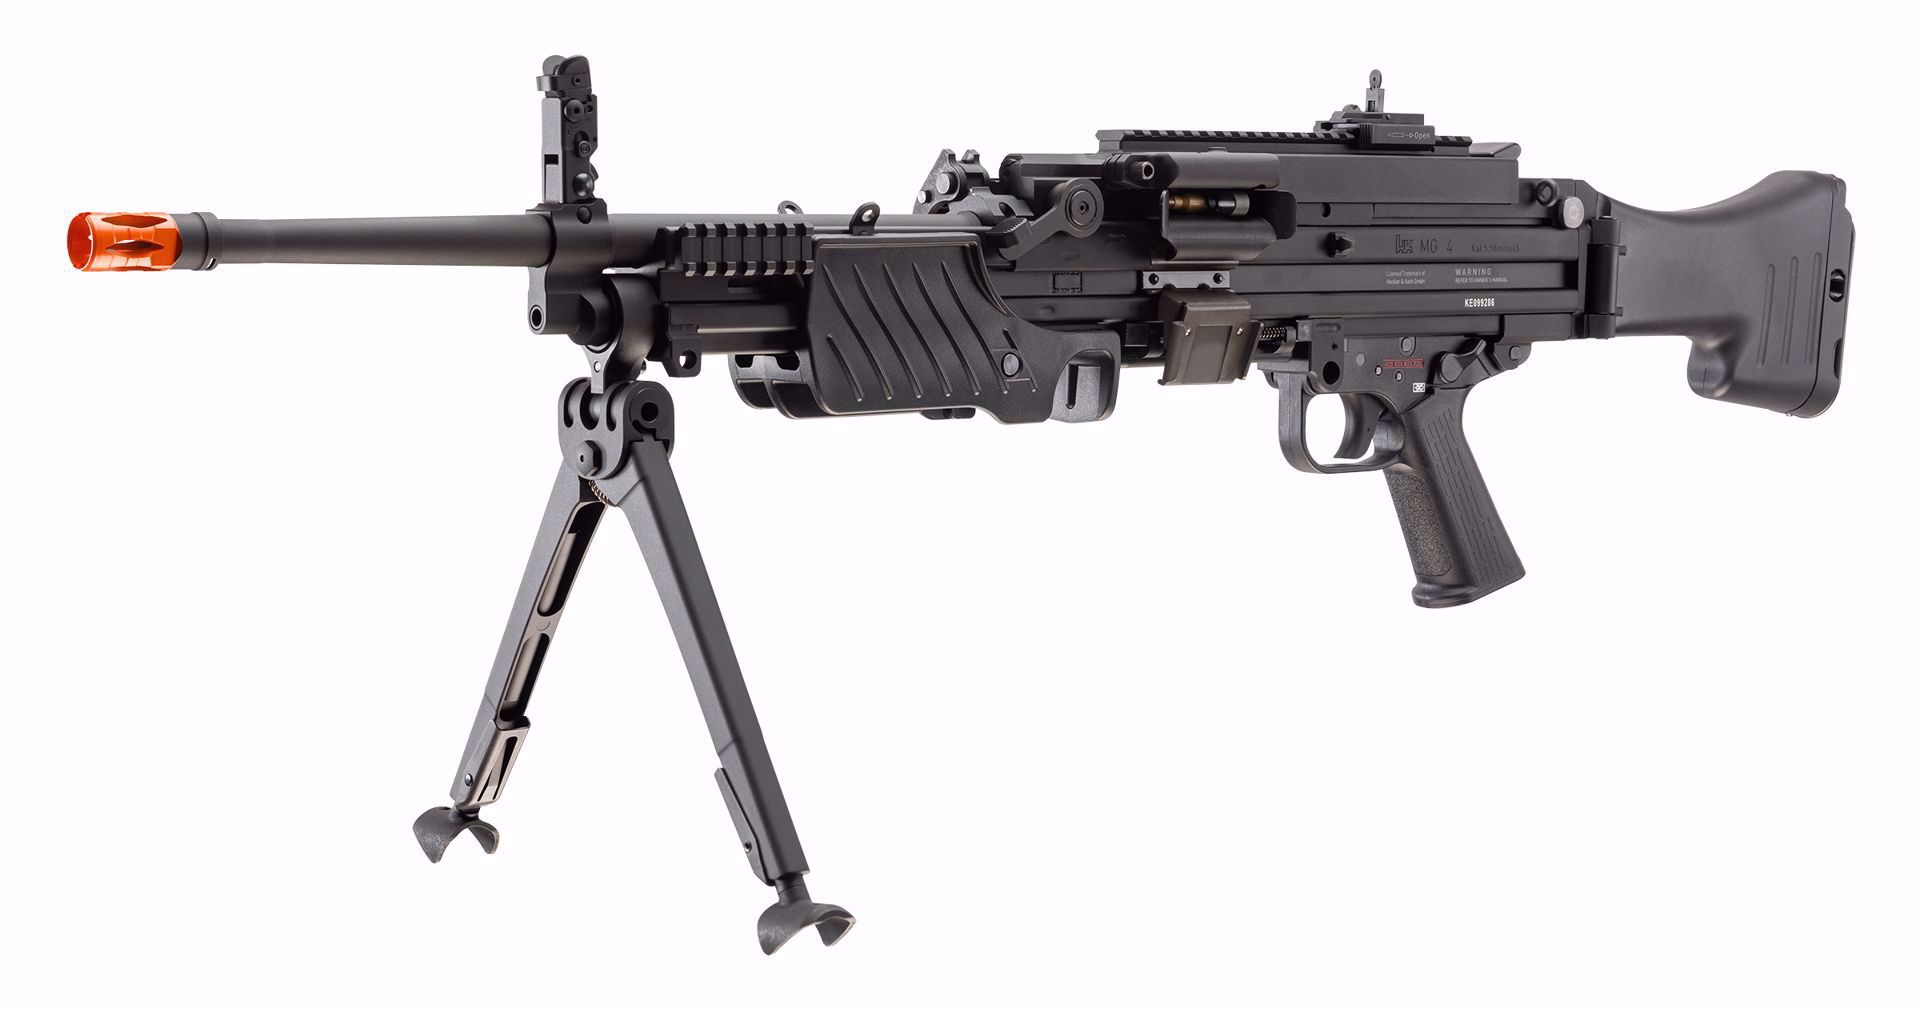 Hk Mg4 Airsoft Aeg High Capacity Rifle 6mm Elite Force Airsoft